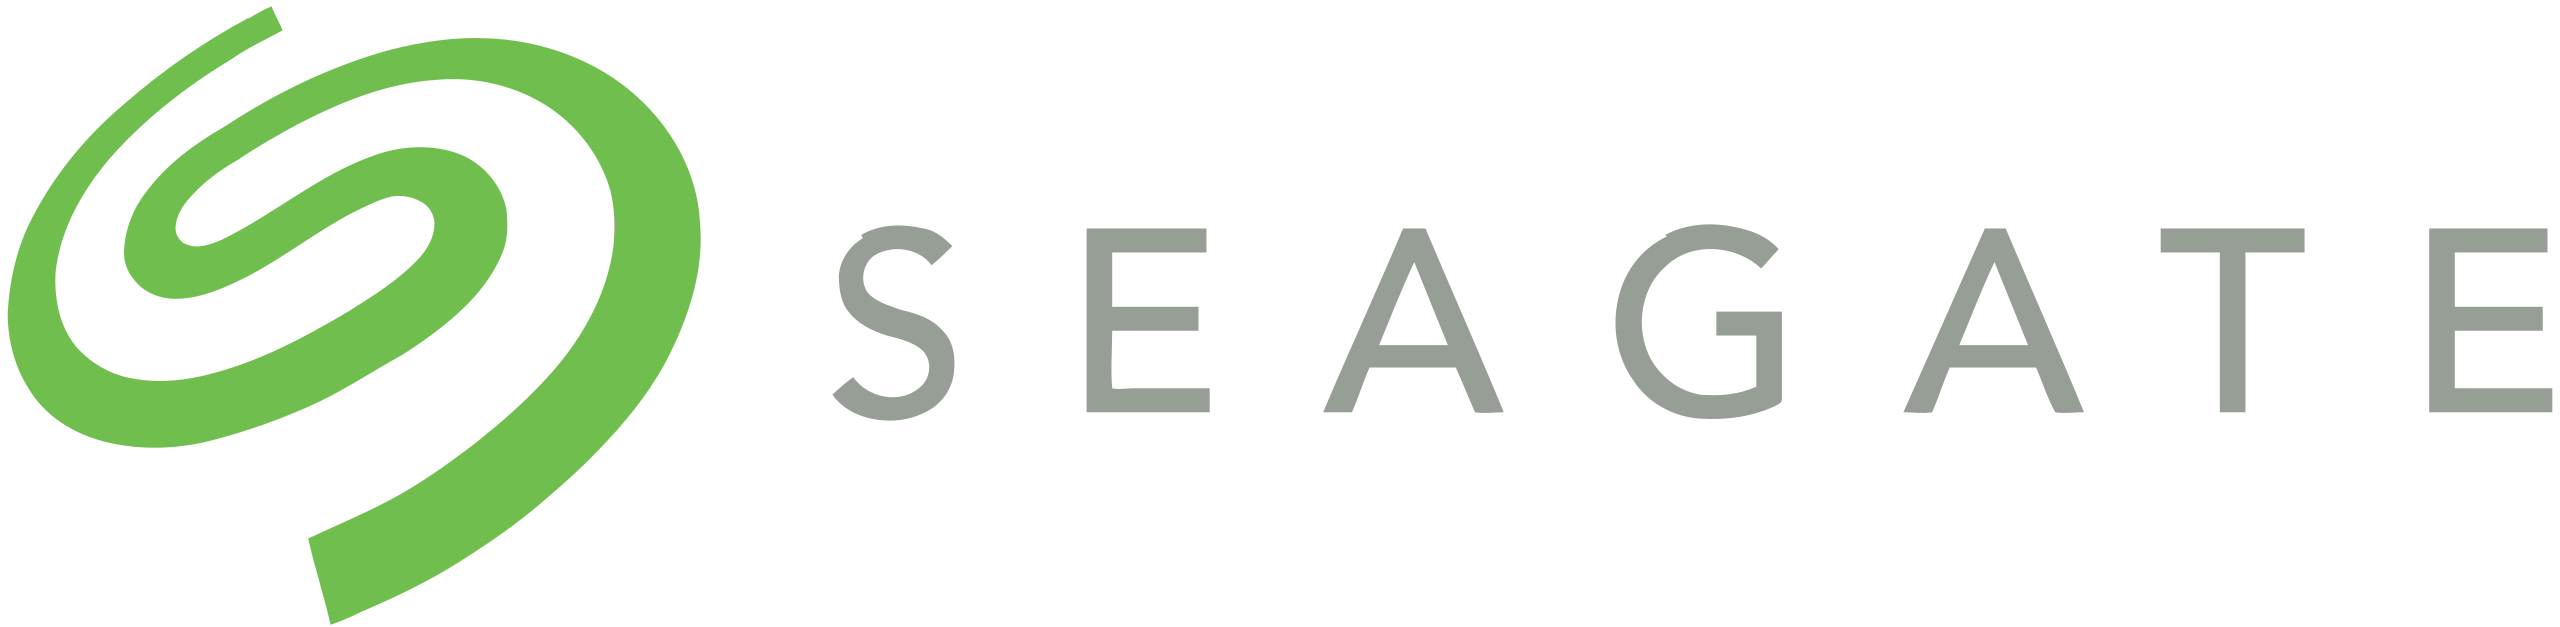 Plik:Seagate logo.svg – Wikipedia, wolna encyklopedia